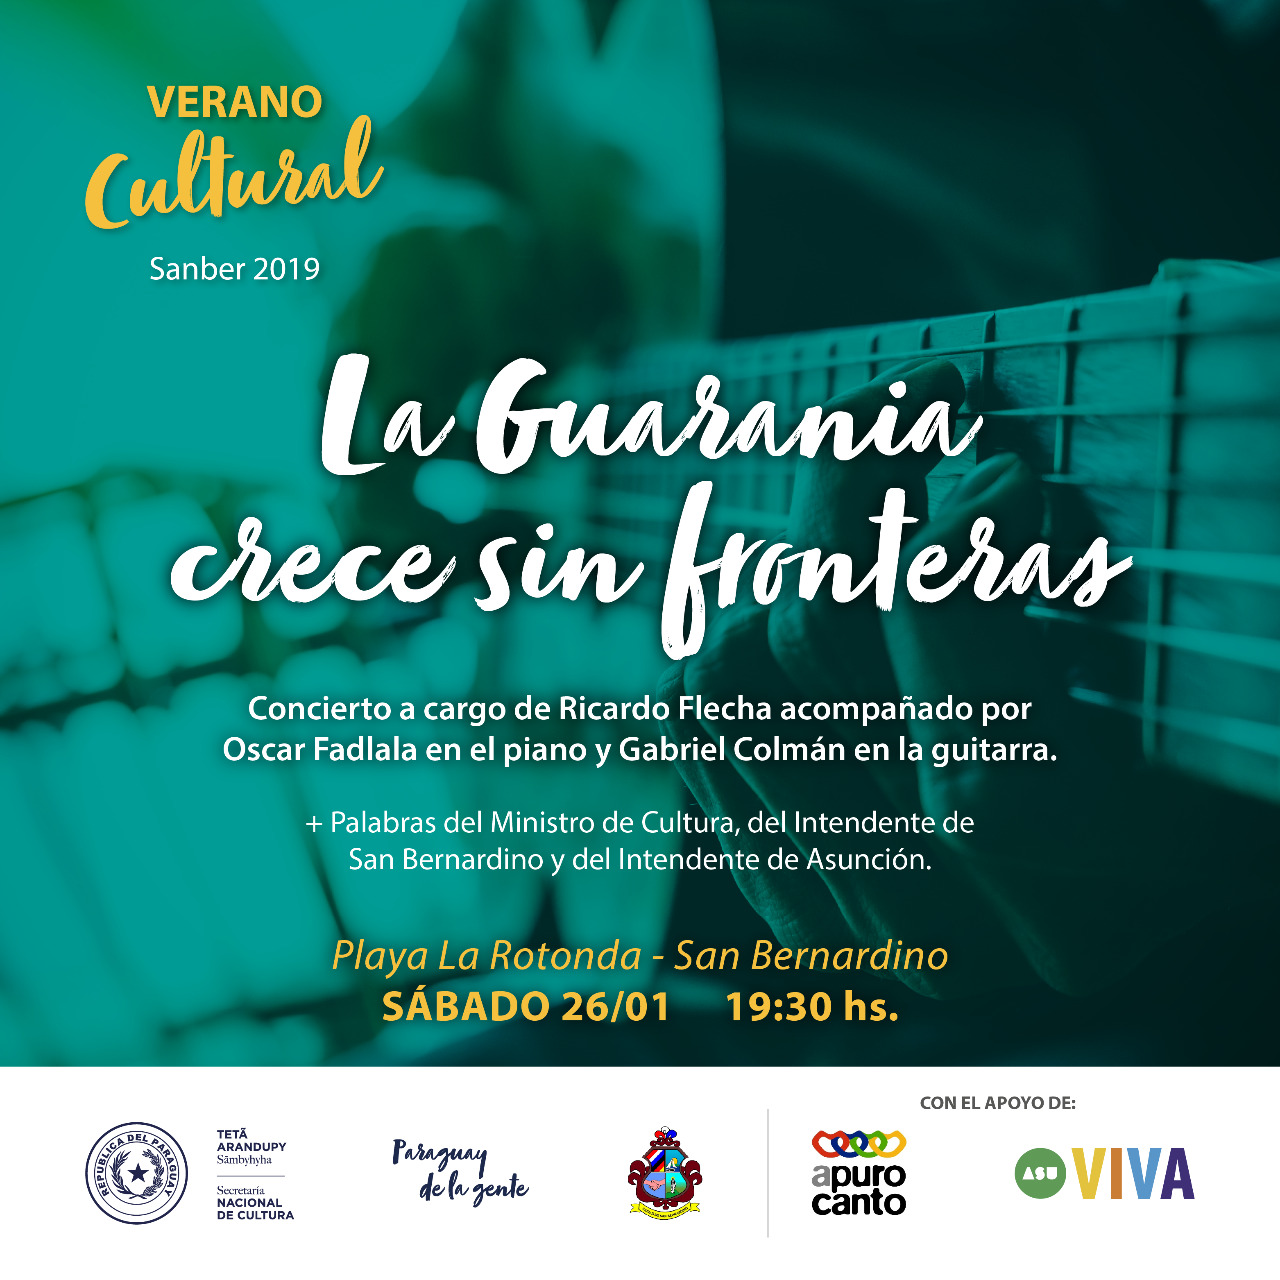 La Guarania será protagonista del “Verano Cultural Sanber 2019” imagen